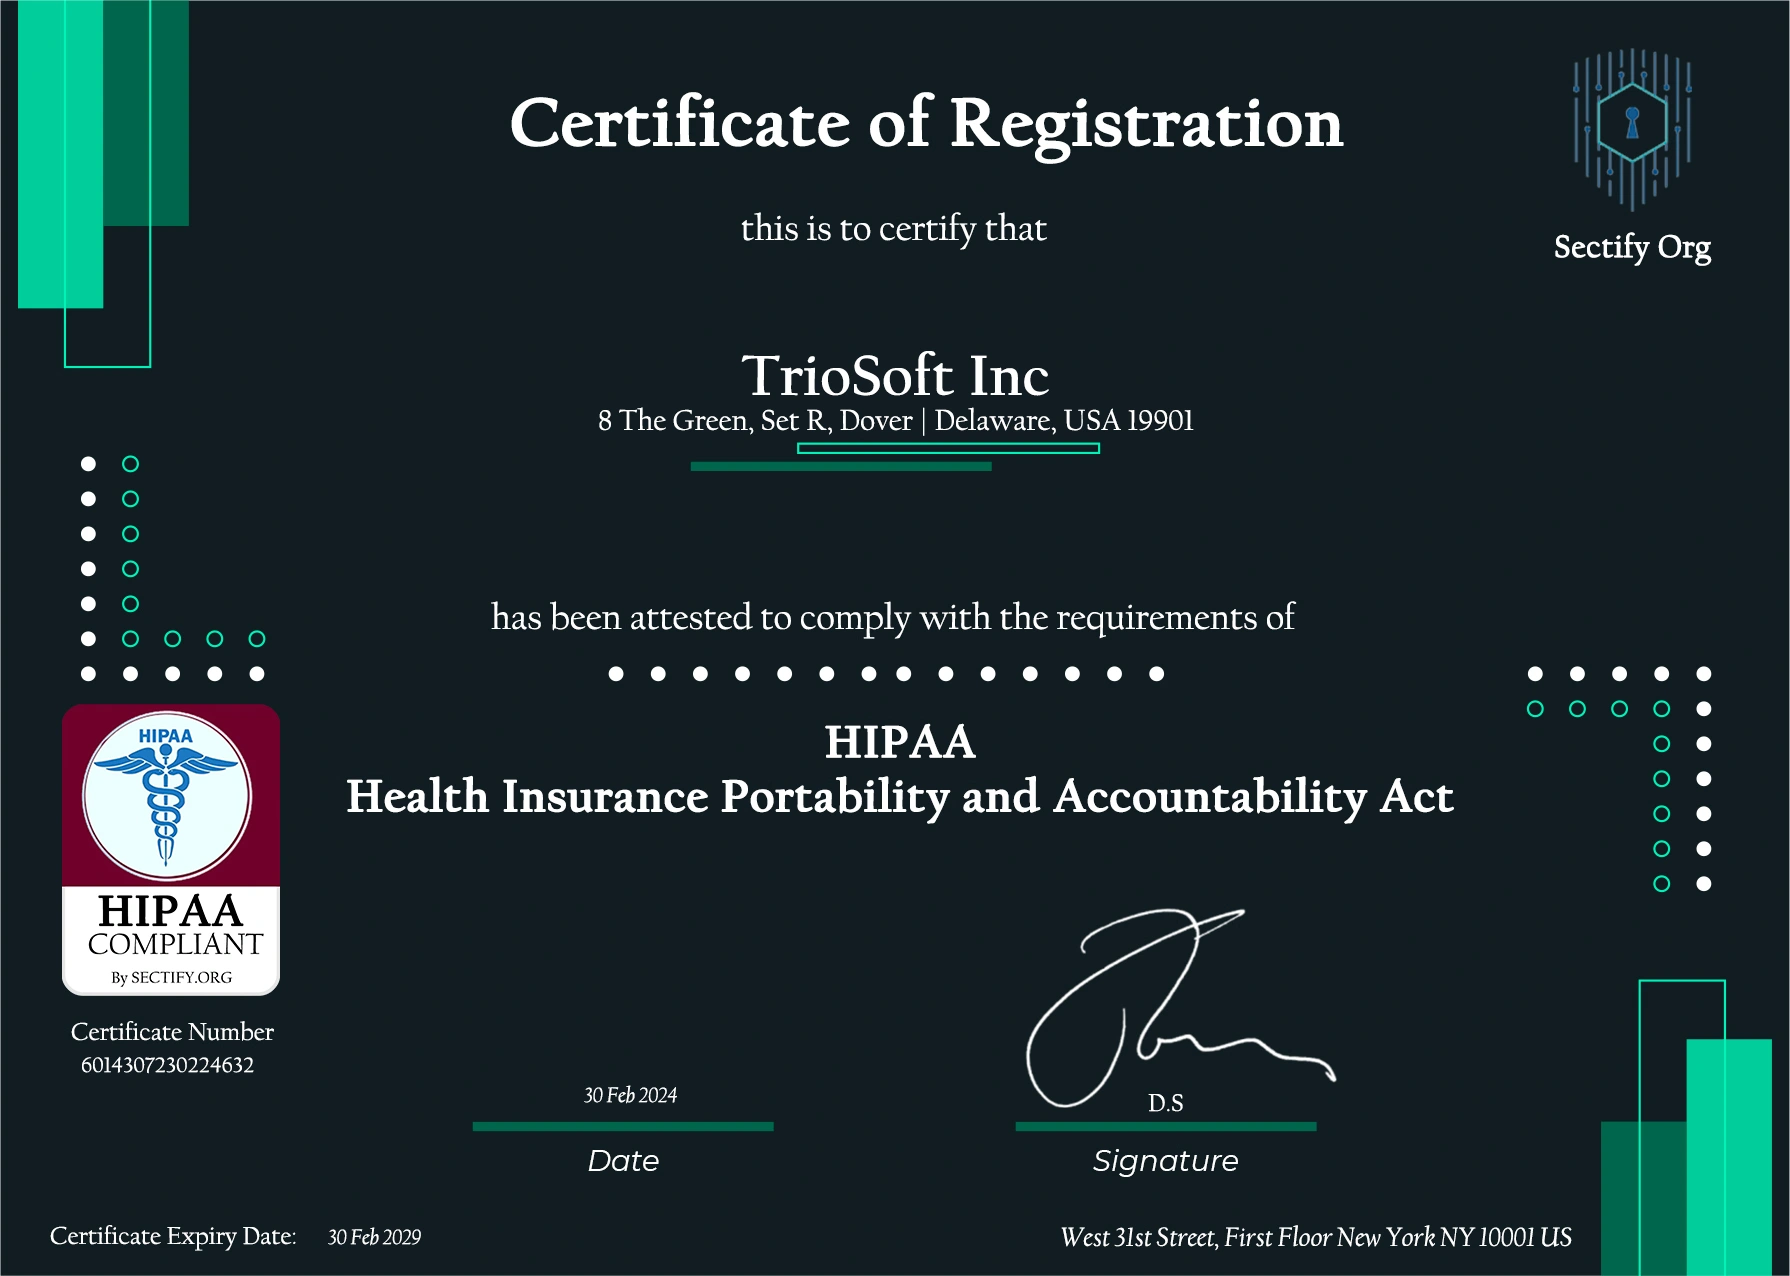 Trio's HIPAA Certificate